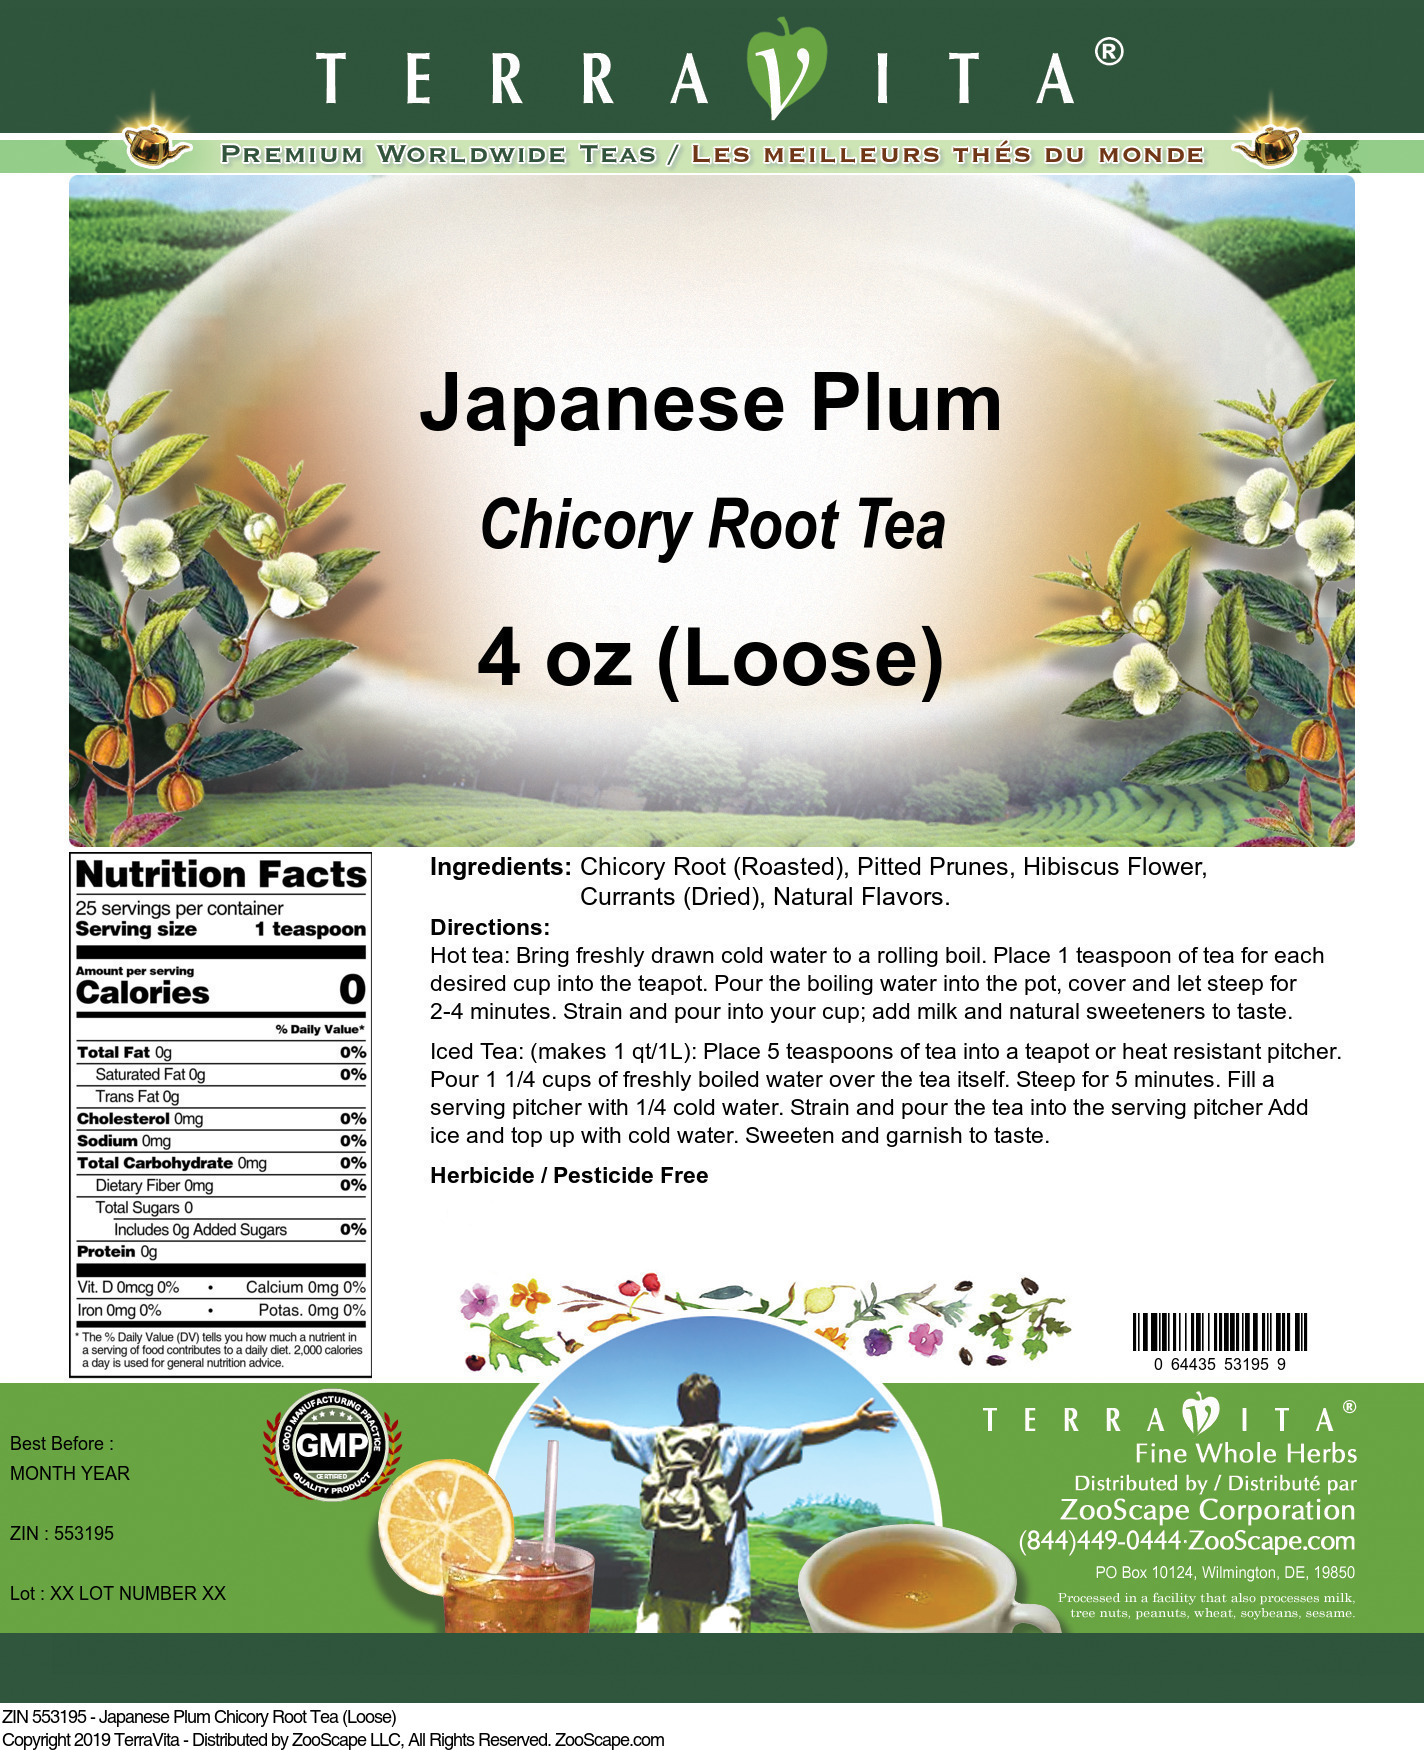 Japanese Plum Chicory Root Tea (Loose) - Label